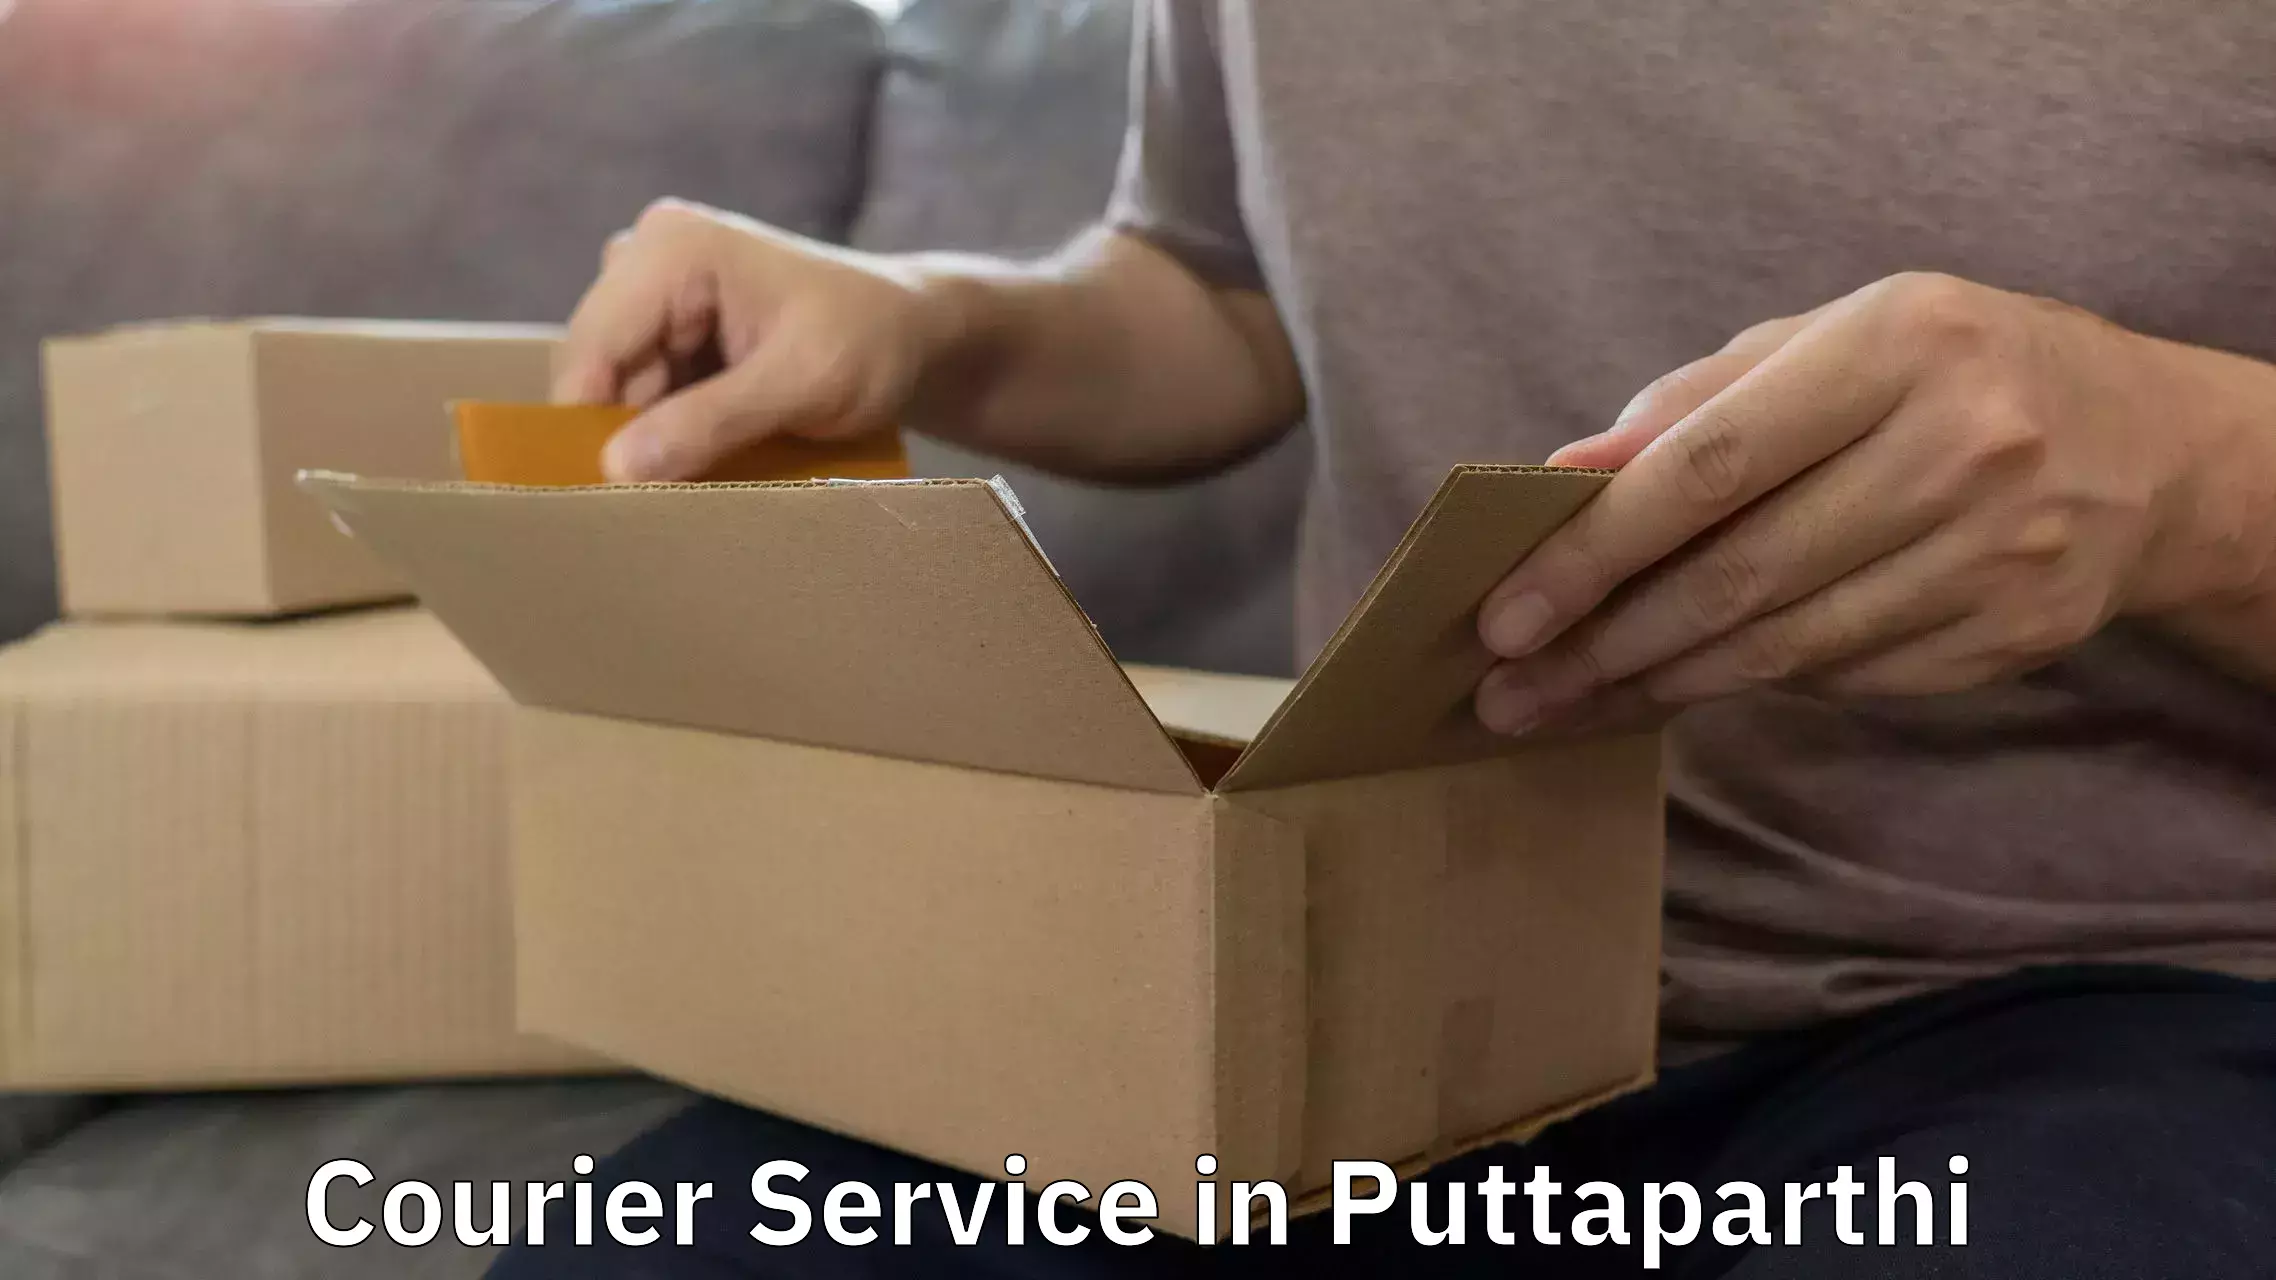 Quick parcel dispatch in Puttaparthi